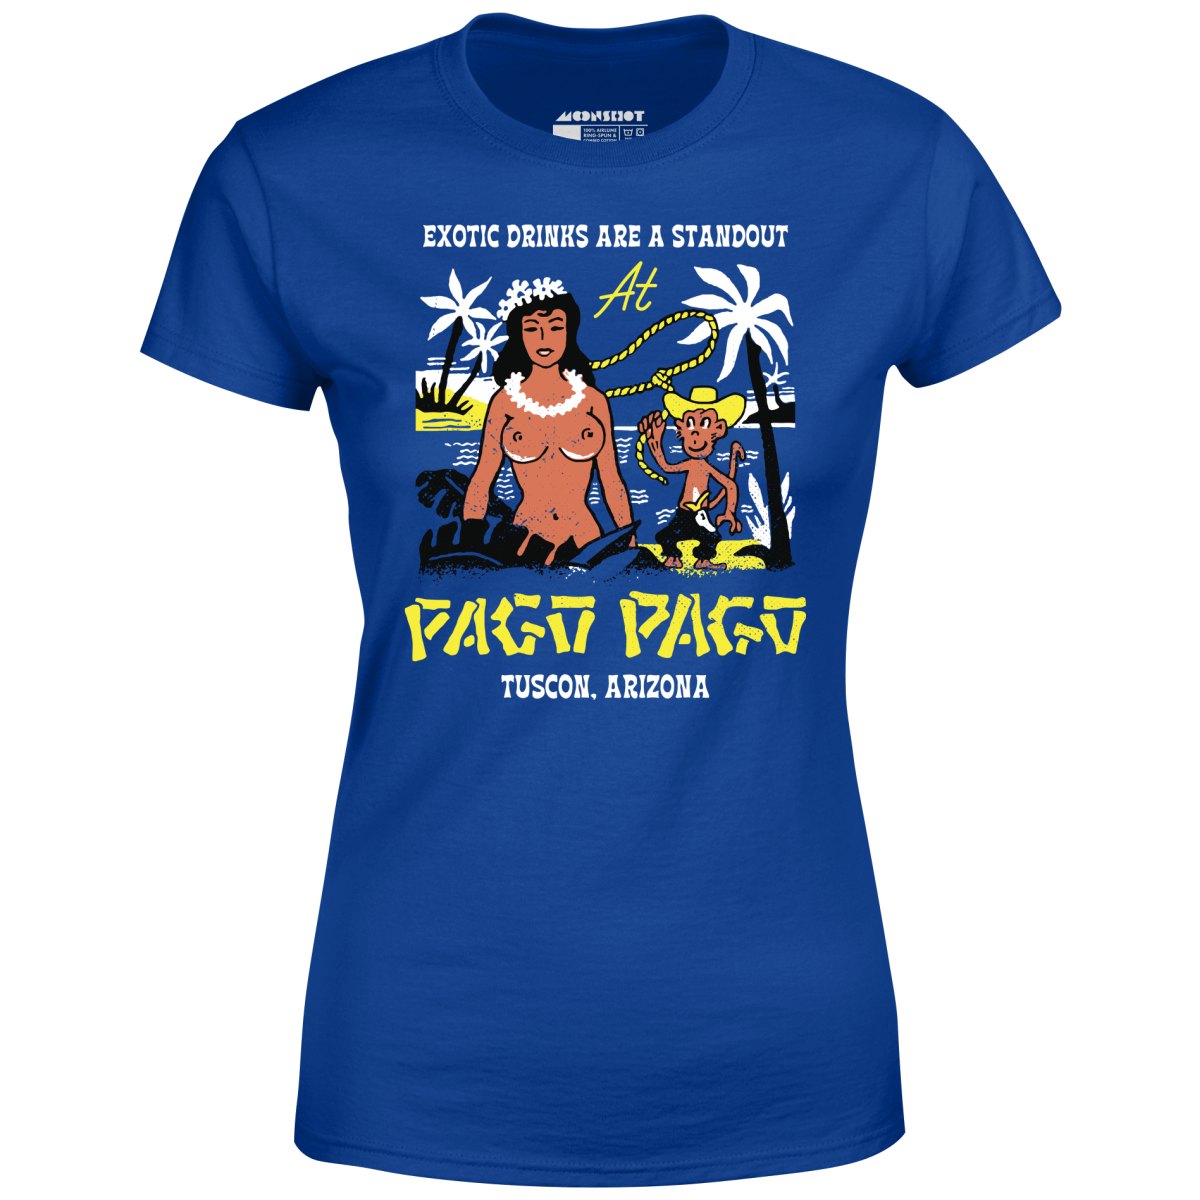 Pago Pago v2 - Tucson, AZ - Vintage Tiki Bar - Women's T-Shirt